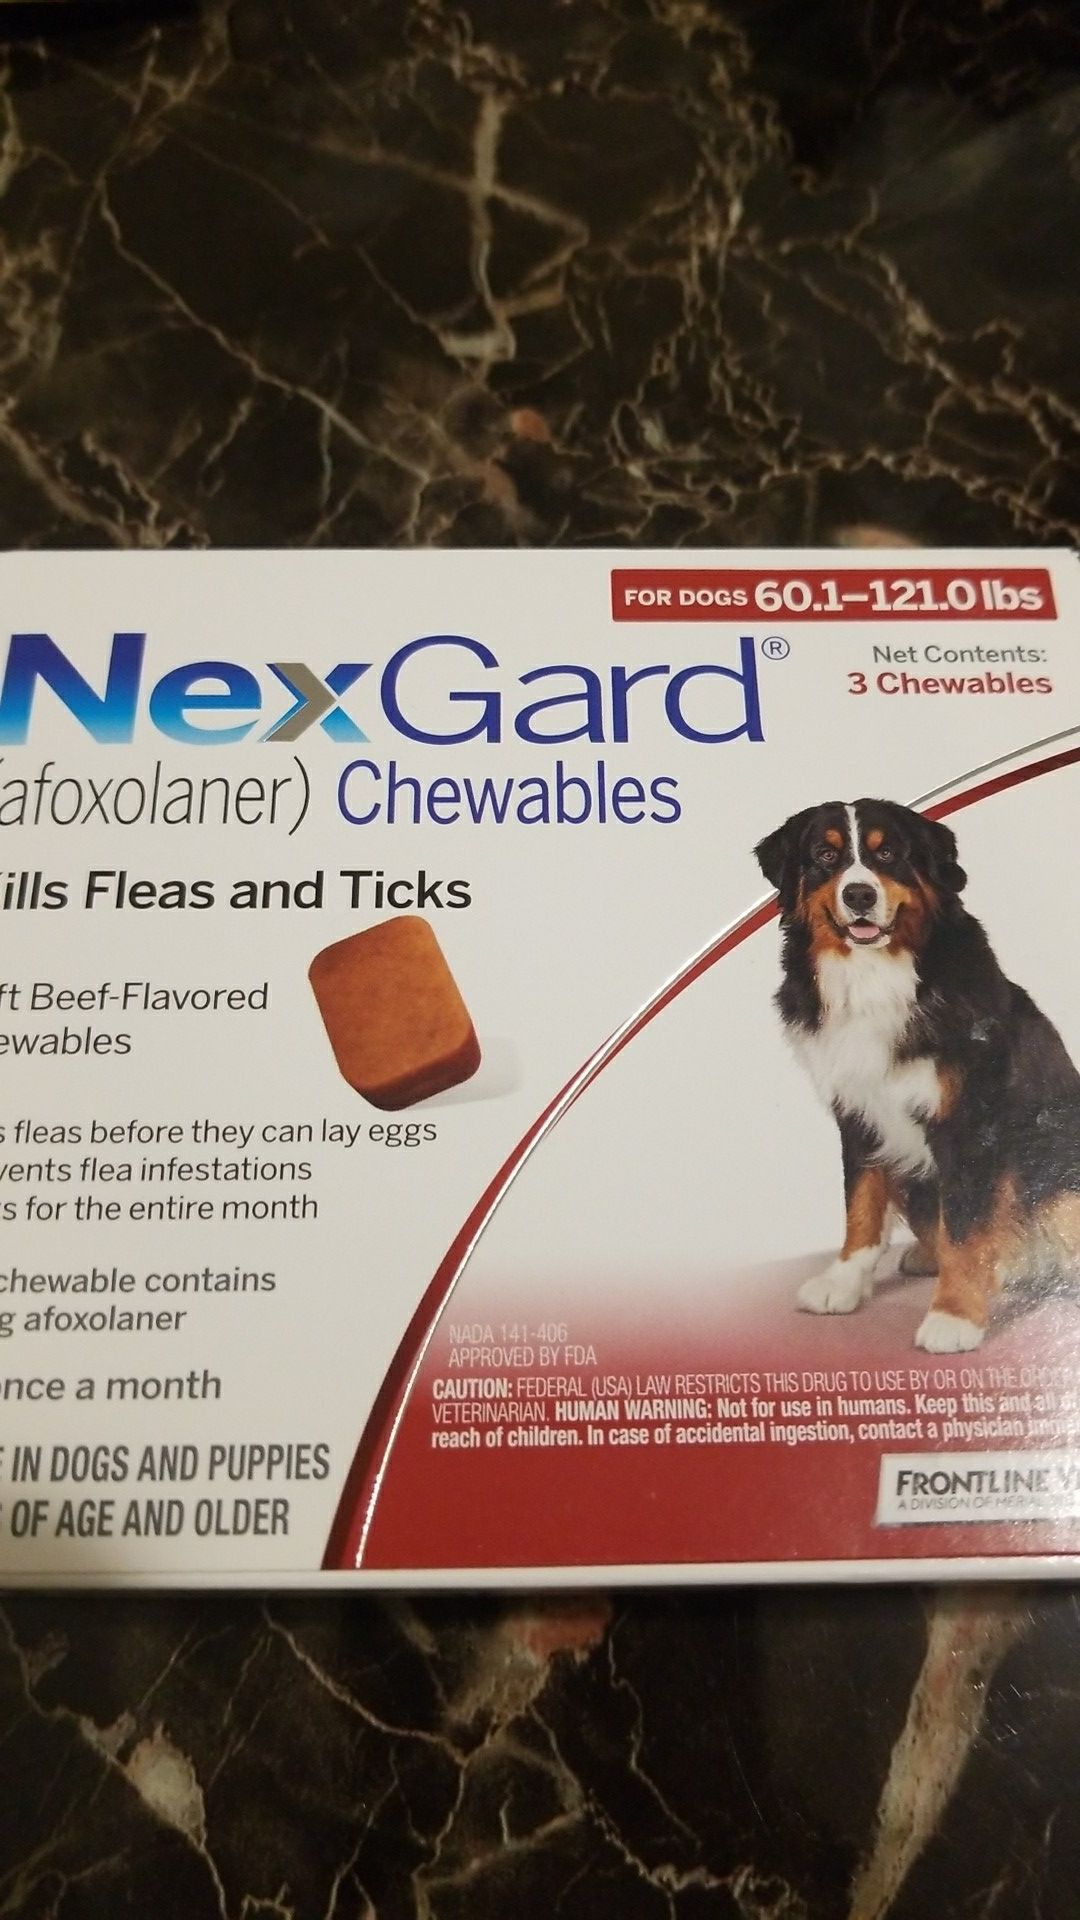 Nexgard flea and tick preventative